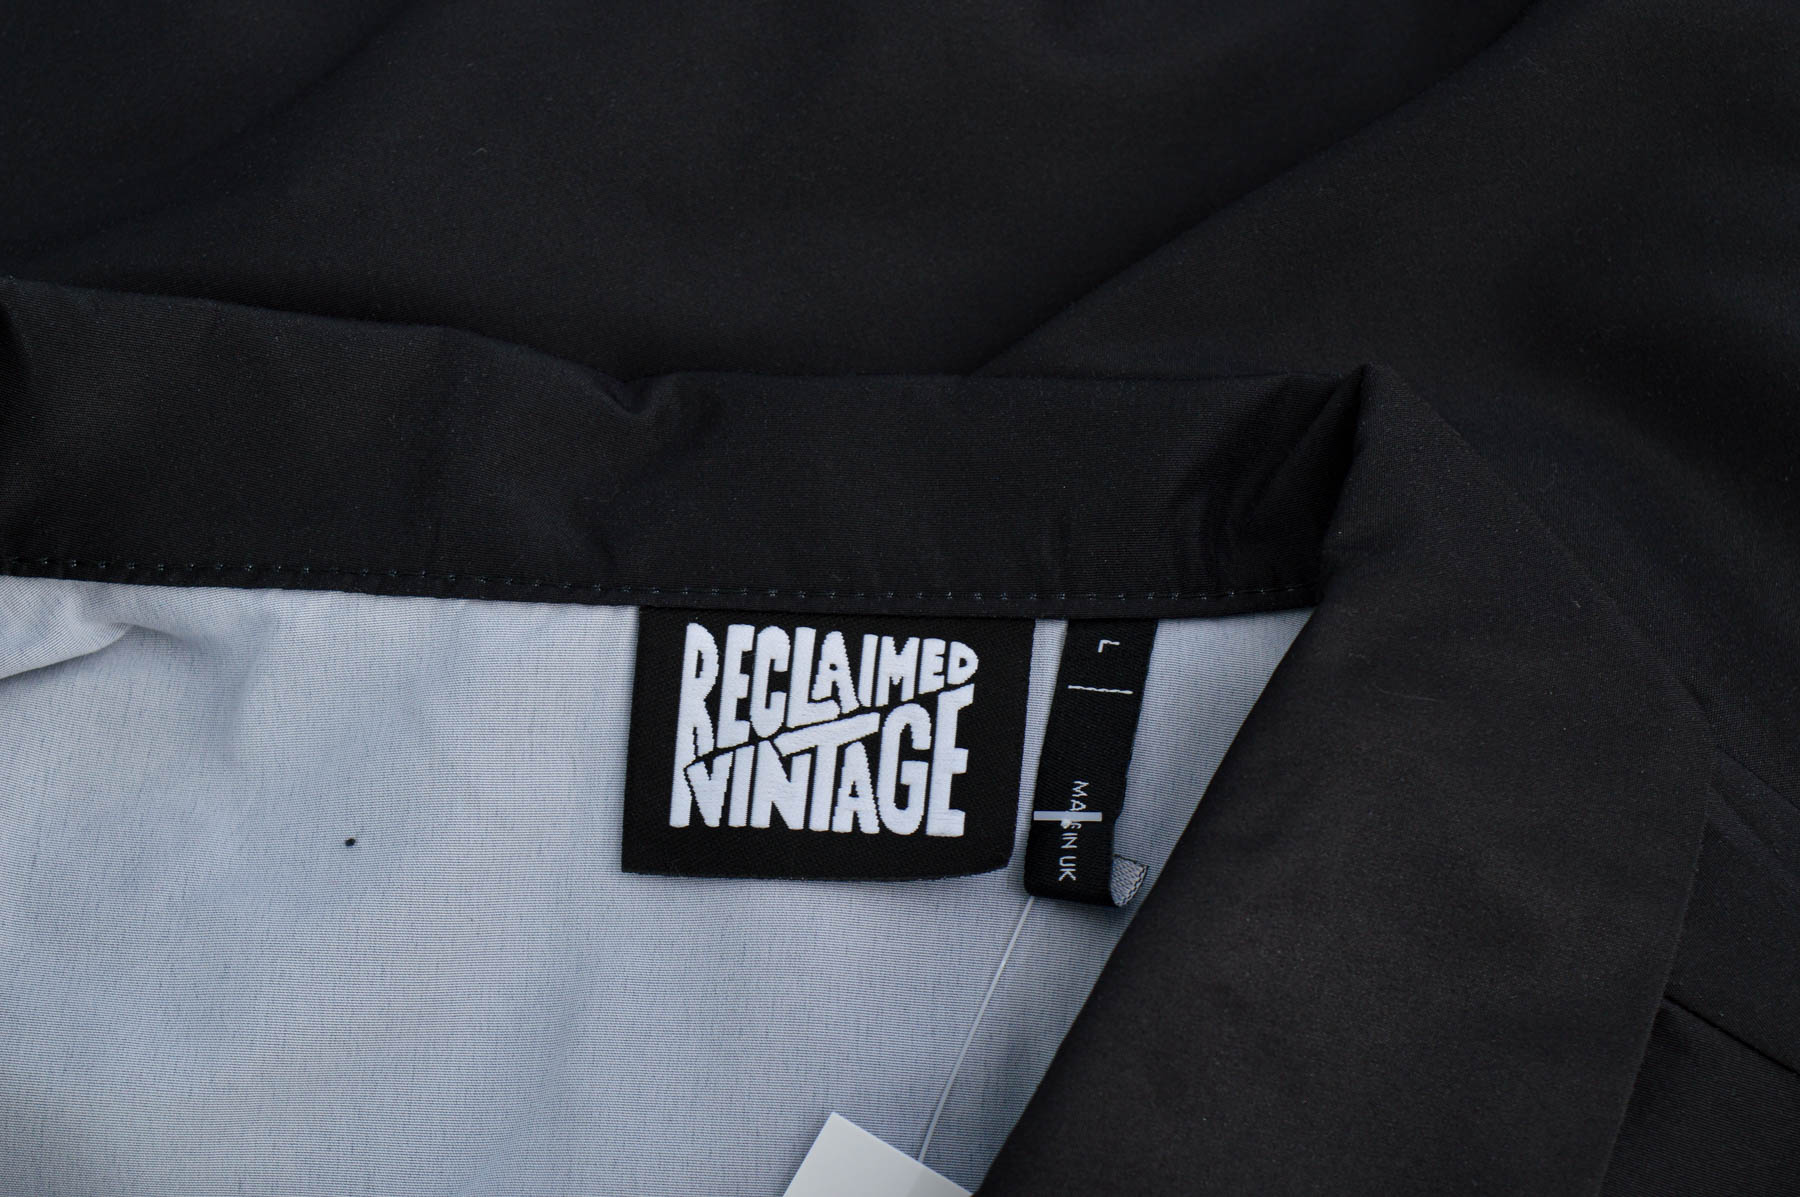 Men's shirt - Reclaimed vintage - 2